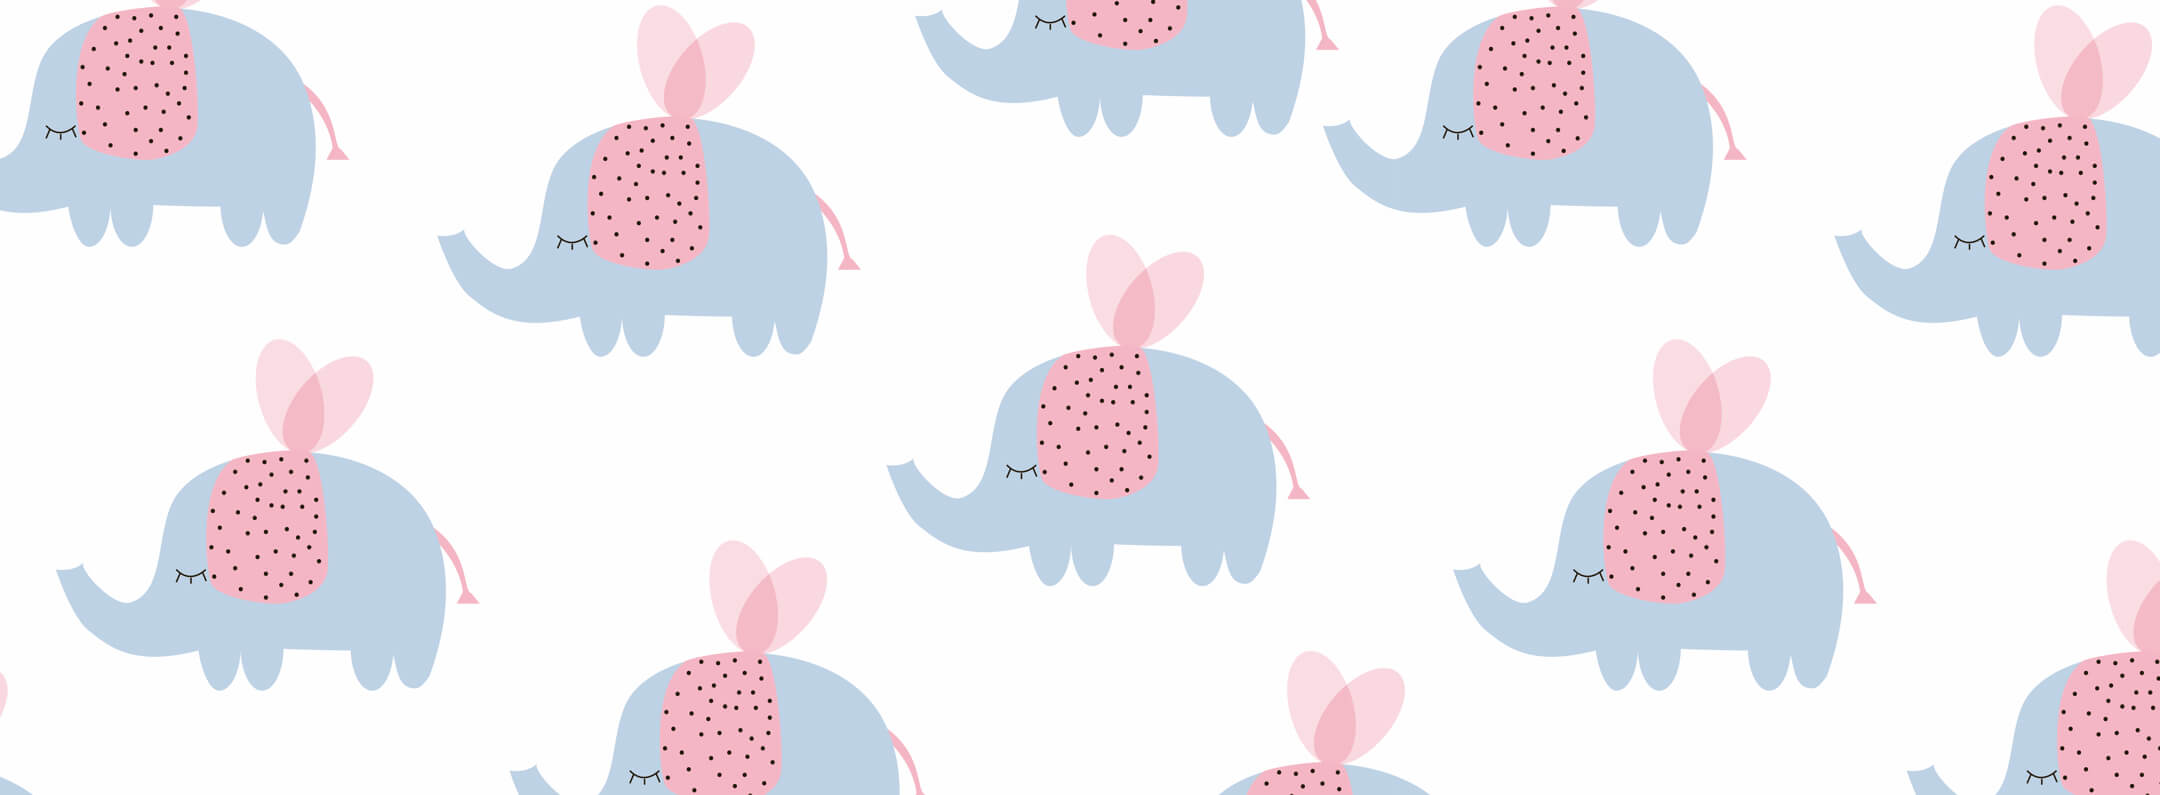 elephant wallpaper